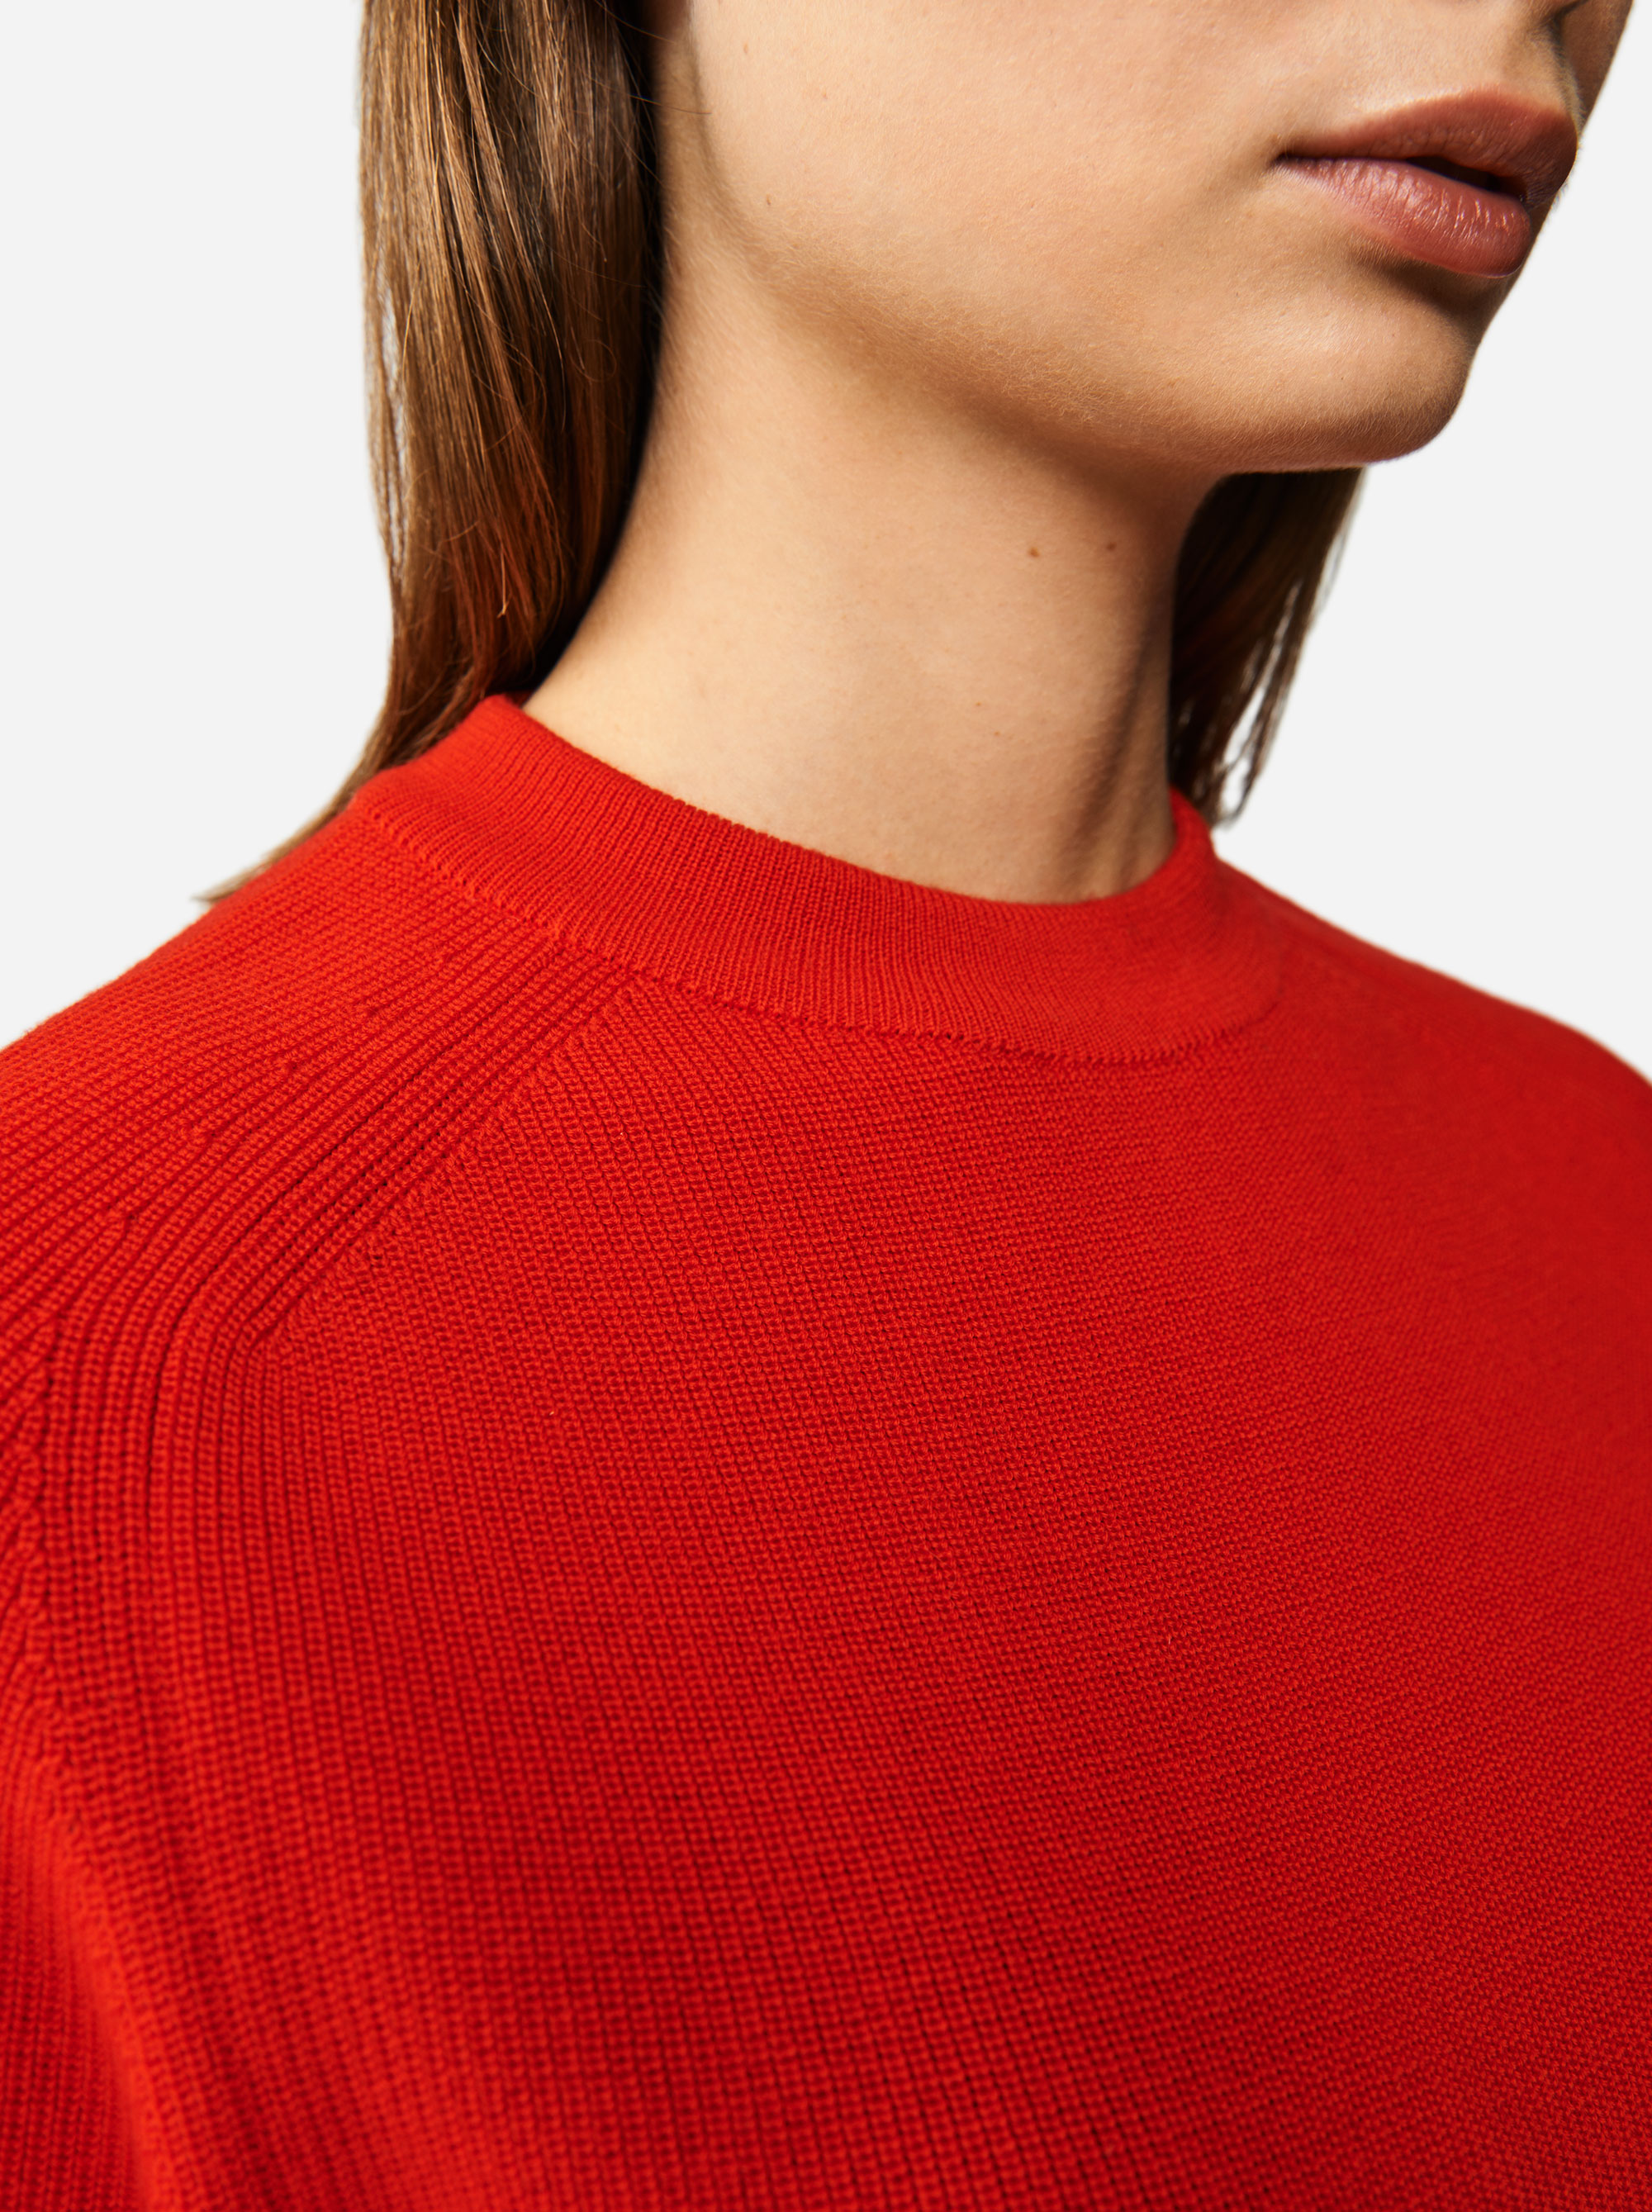 Teym - Crewneck - The Merino Sweater - Women - Red - 2